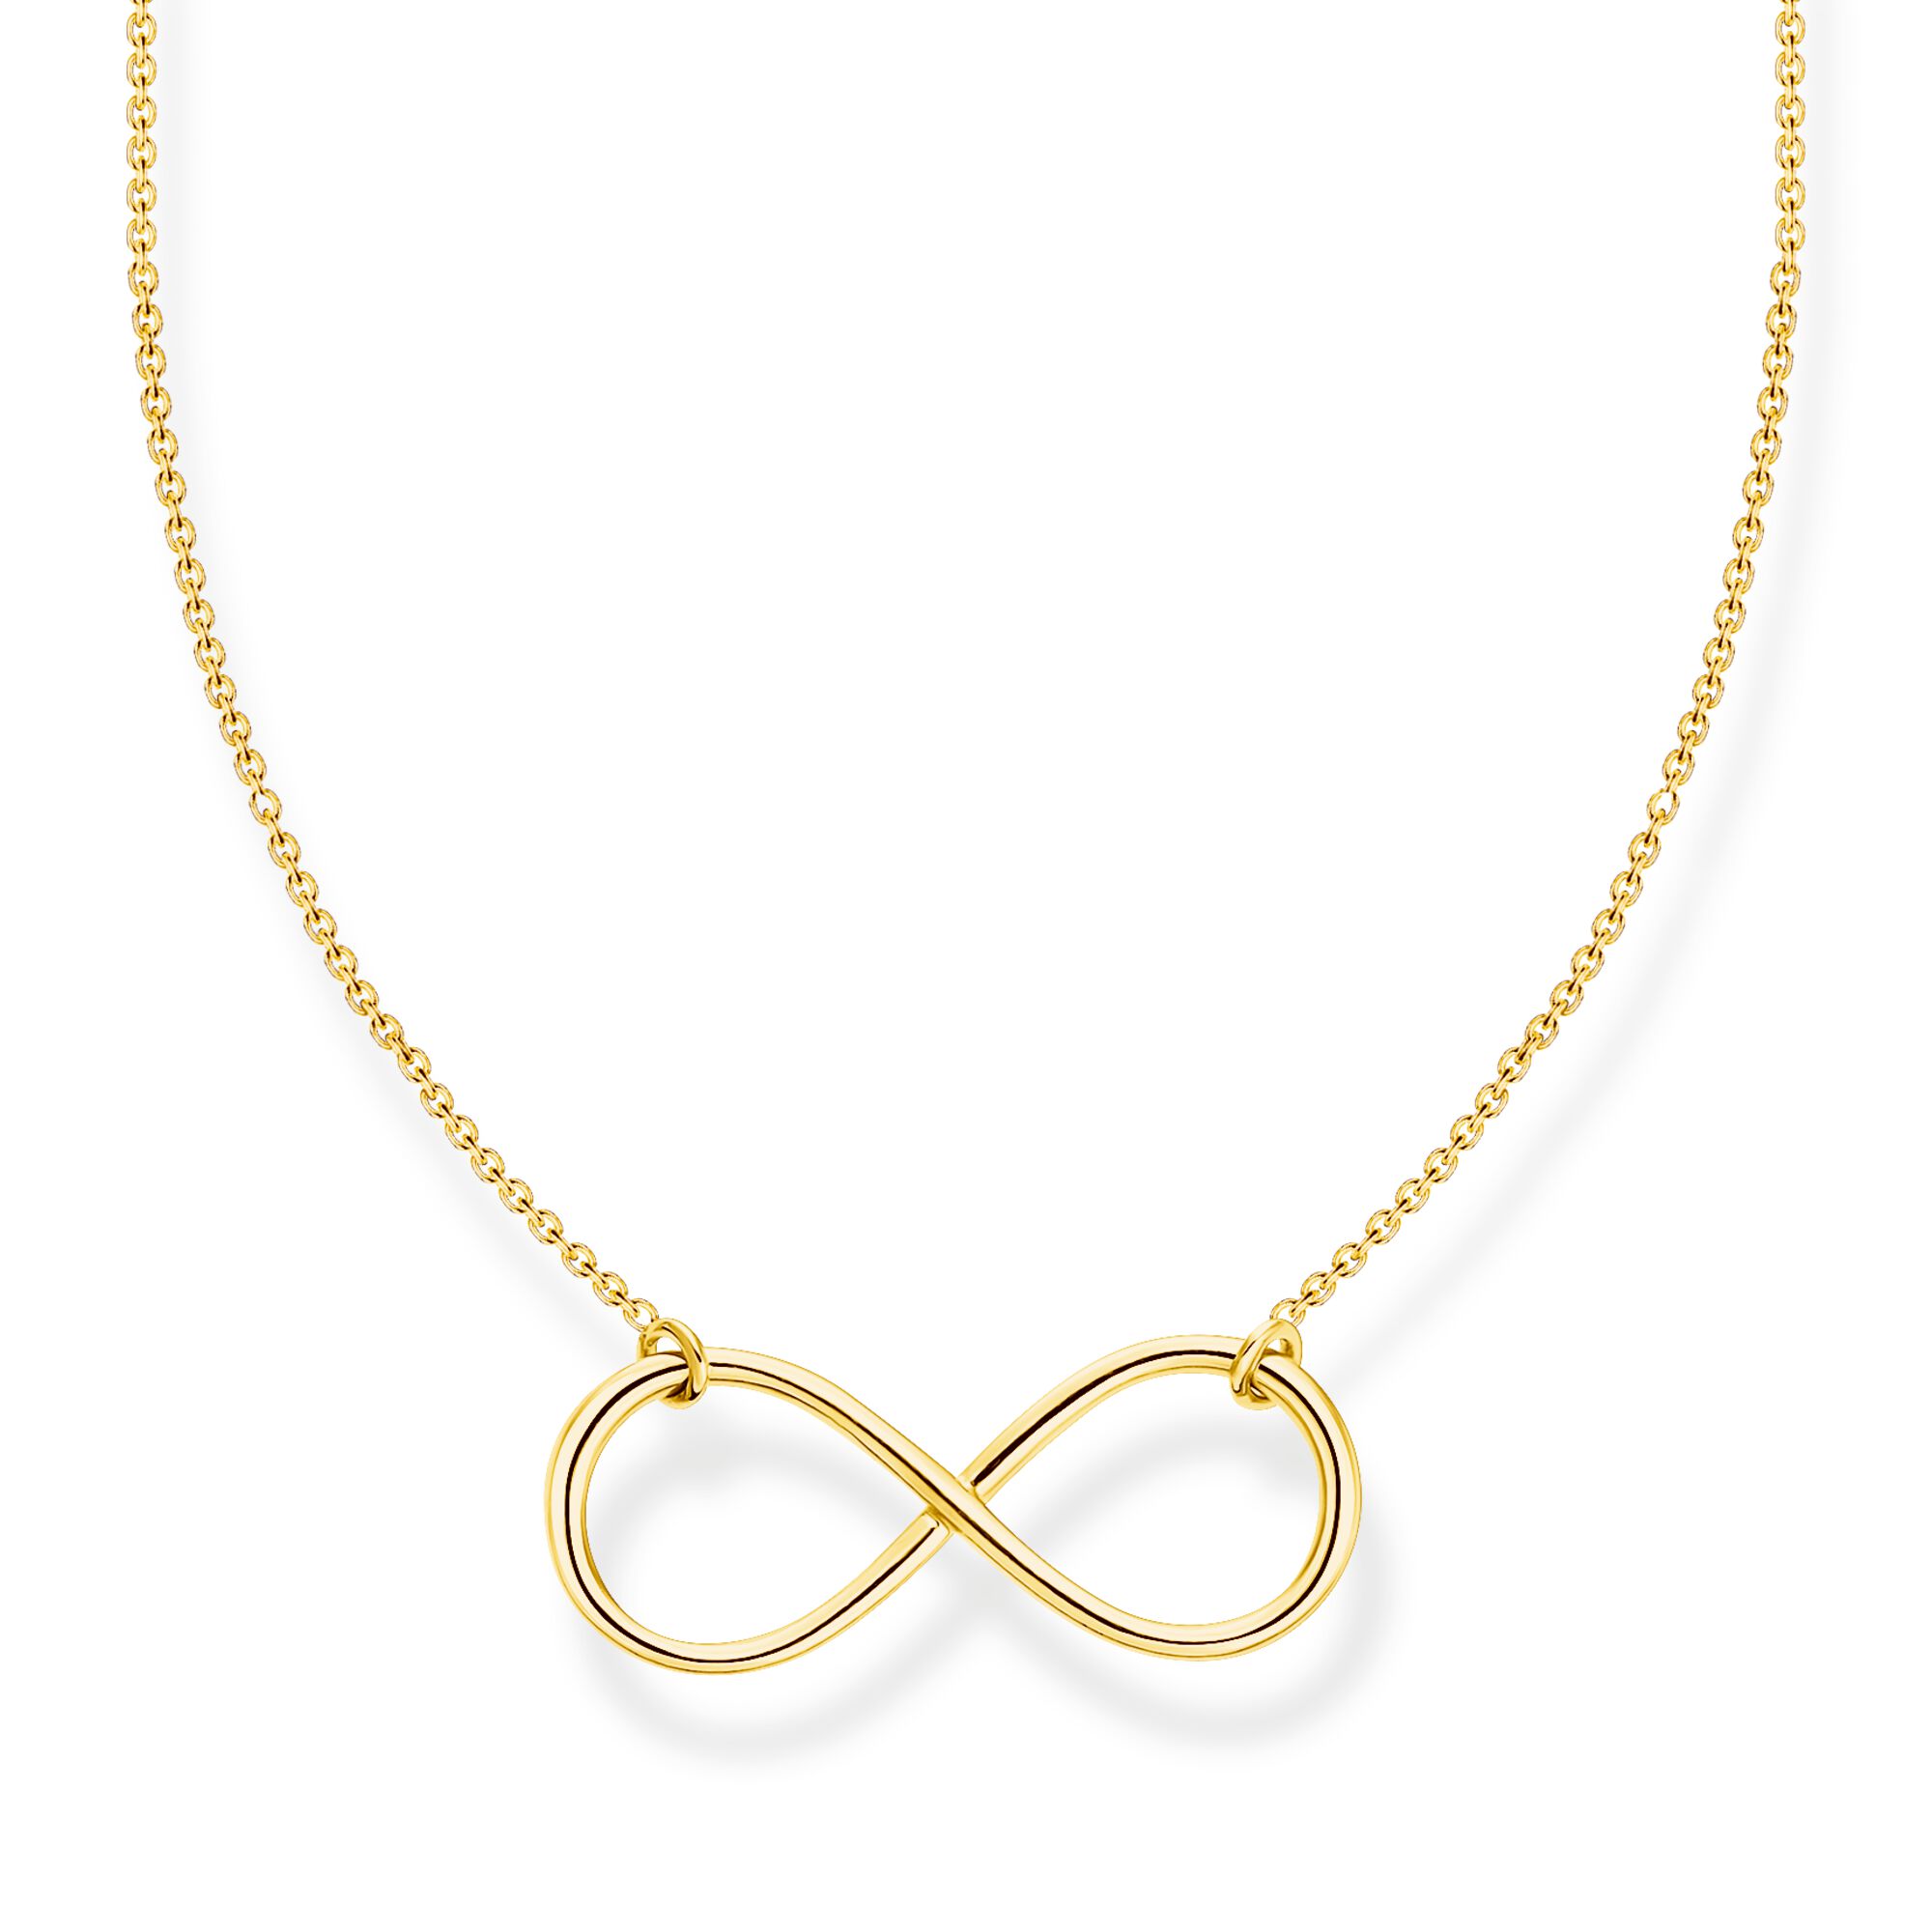 Thomas Sabo Infinity Gold Necklace